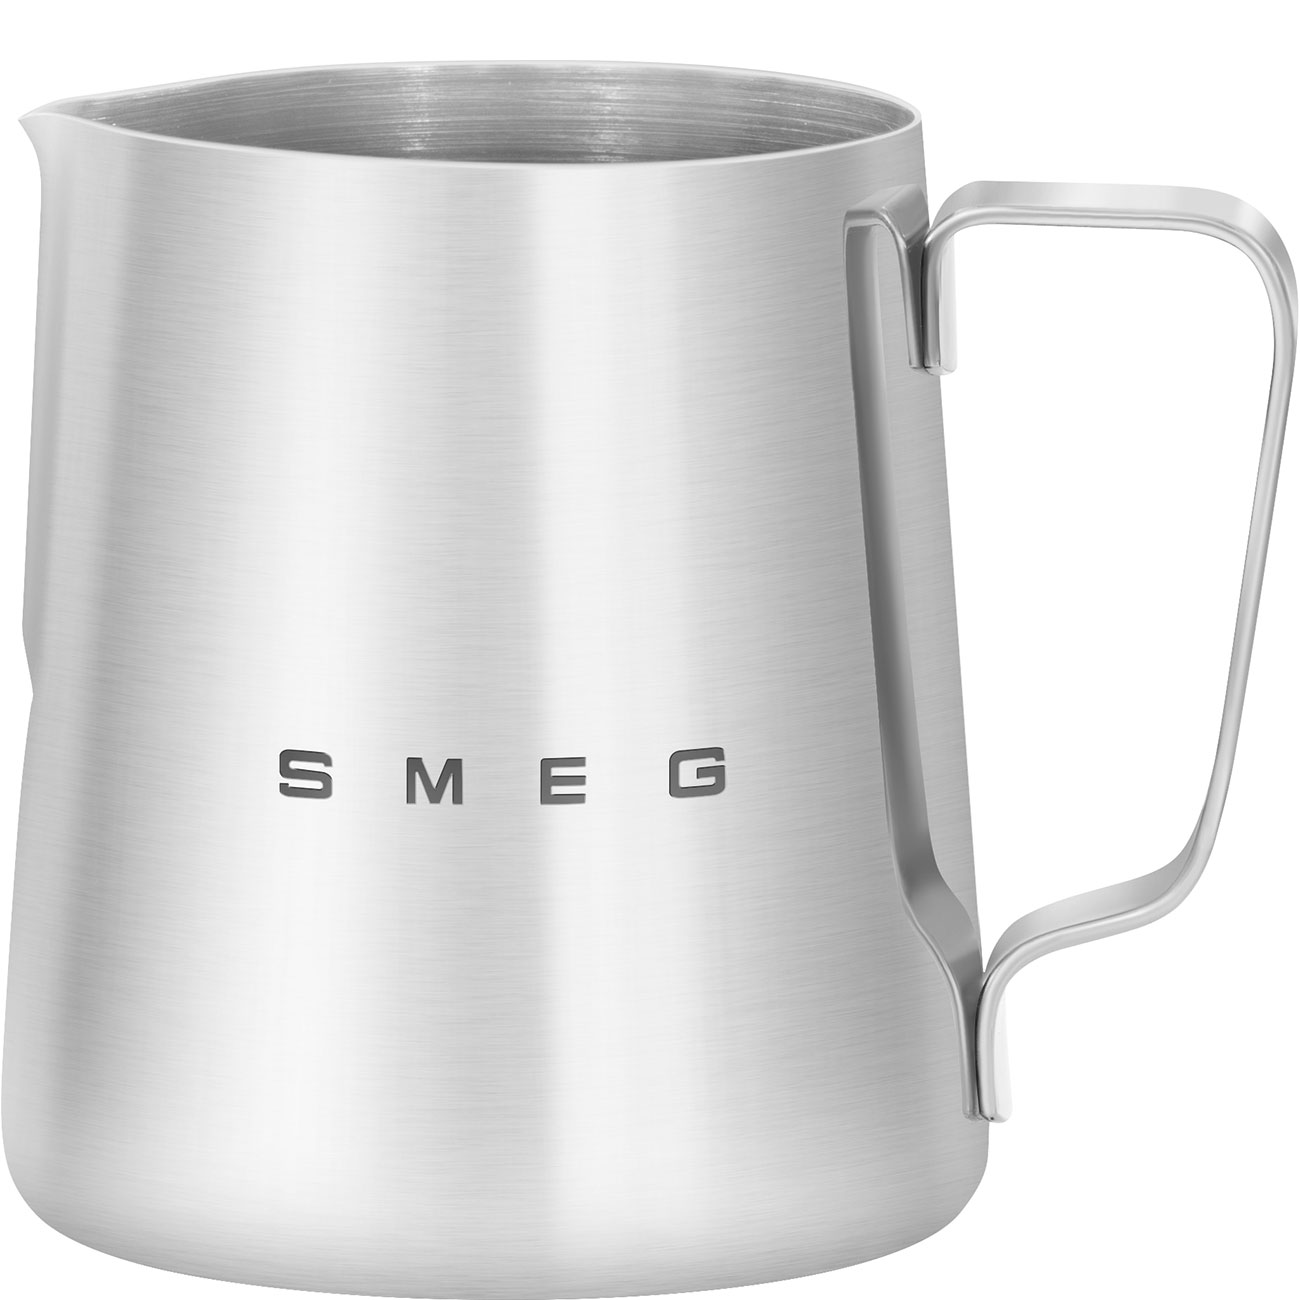 Carafe accessory for Smeg Coffee machines - CMMJ01_1